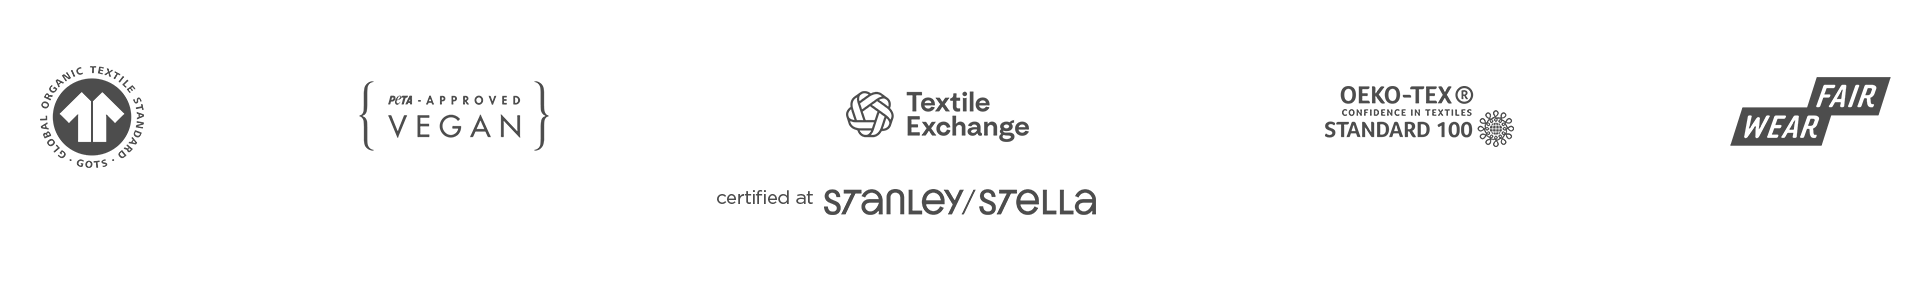 Gots zerifiziert peta approved vegan Textile Exchange Oeko Tex Standard 100 Fair Wear wide